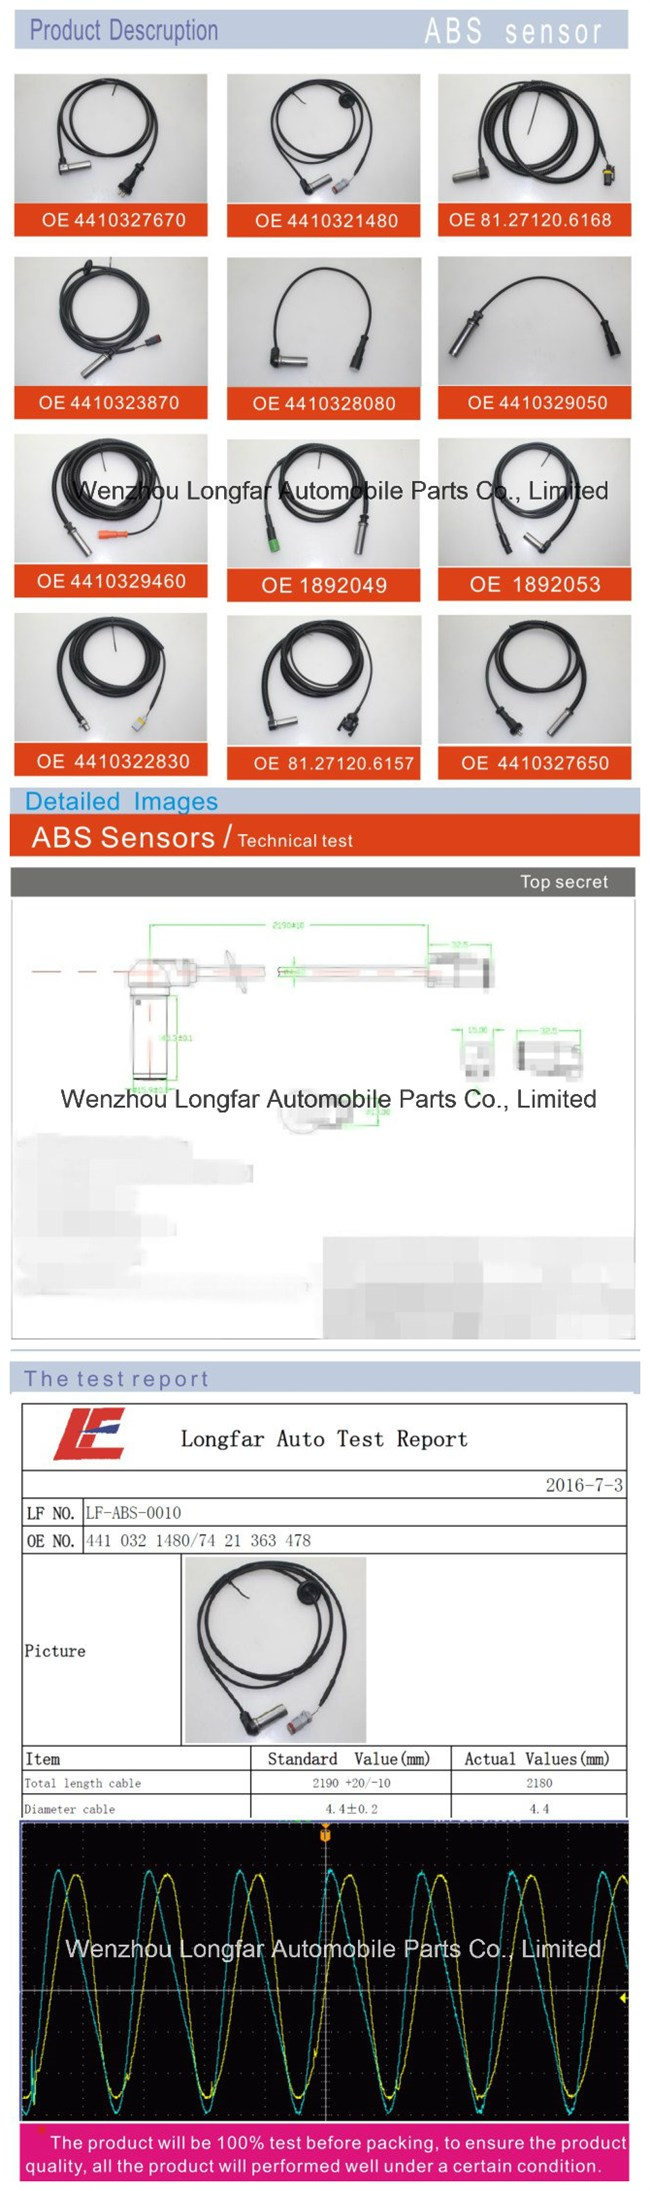 ABS Sensor Anti-Lock Braking System Sensor Transducer Indicator 4410321480 5010457882 7421363478 21363478 74 21 363 478 for Mercedes-Benz Daf Iveco Scania Truck